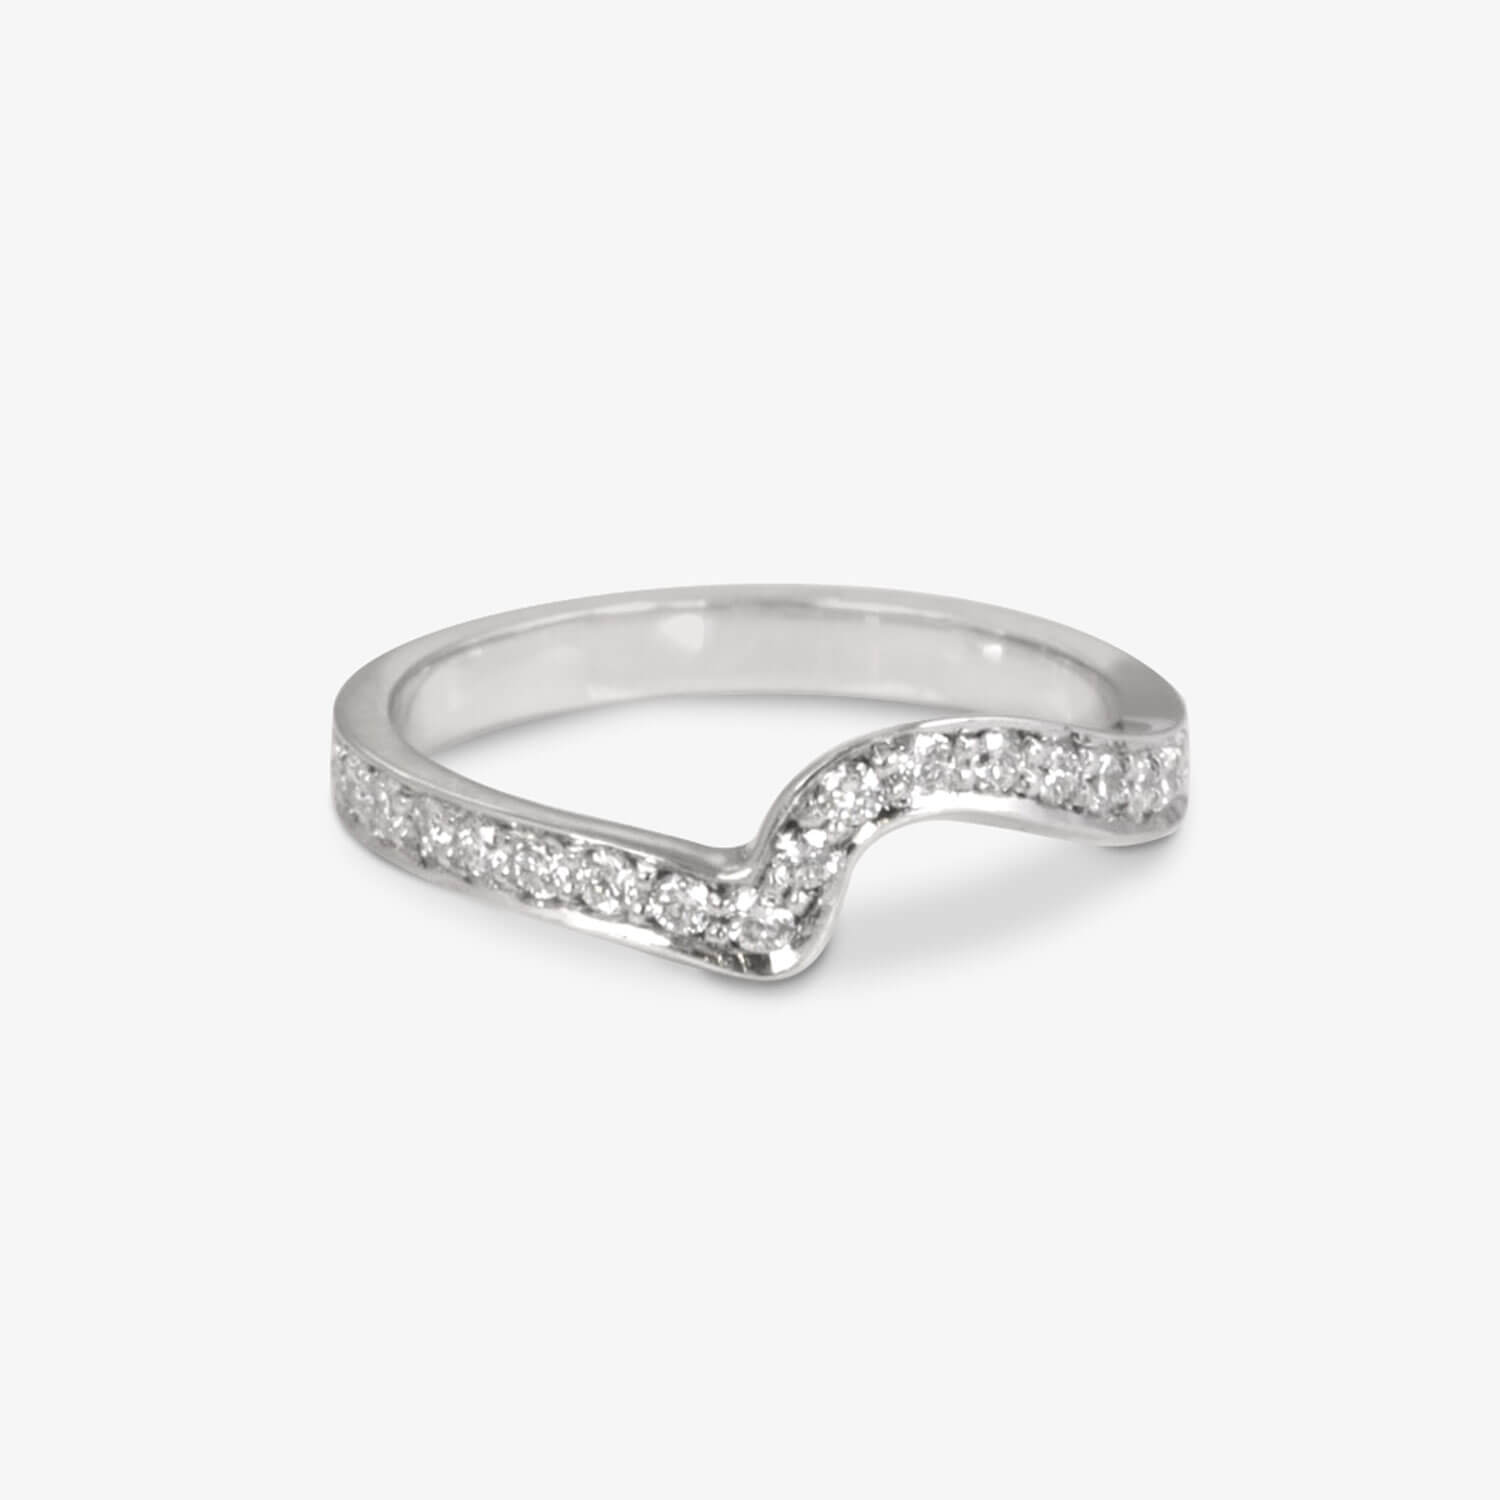 Bespoke Pavé Set Diamond Shaped Eternity Ring